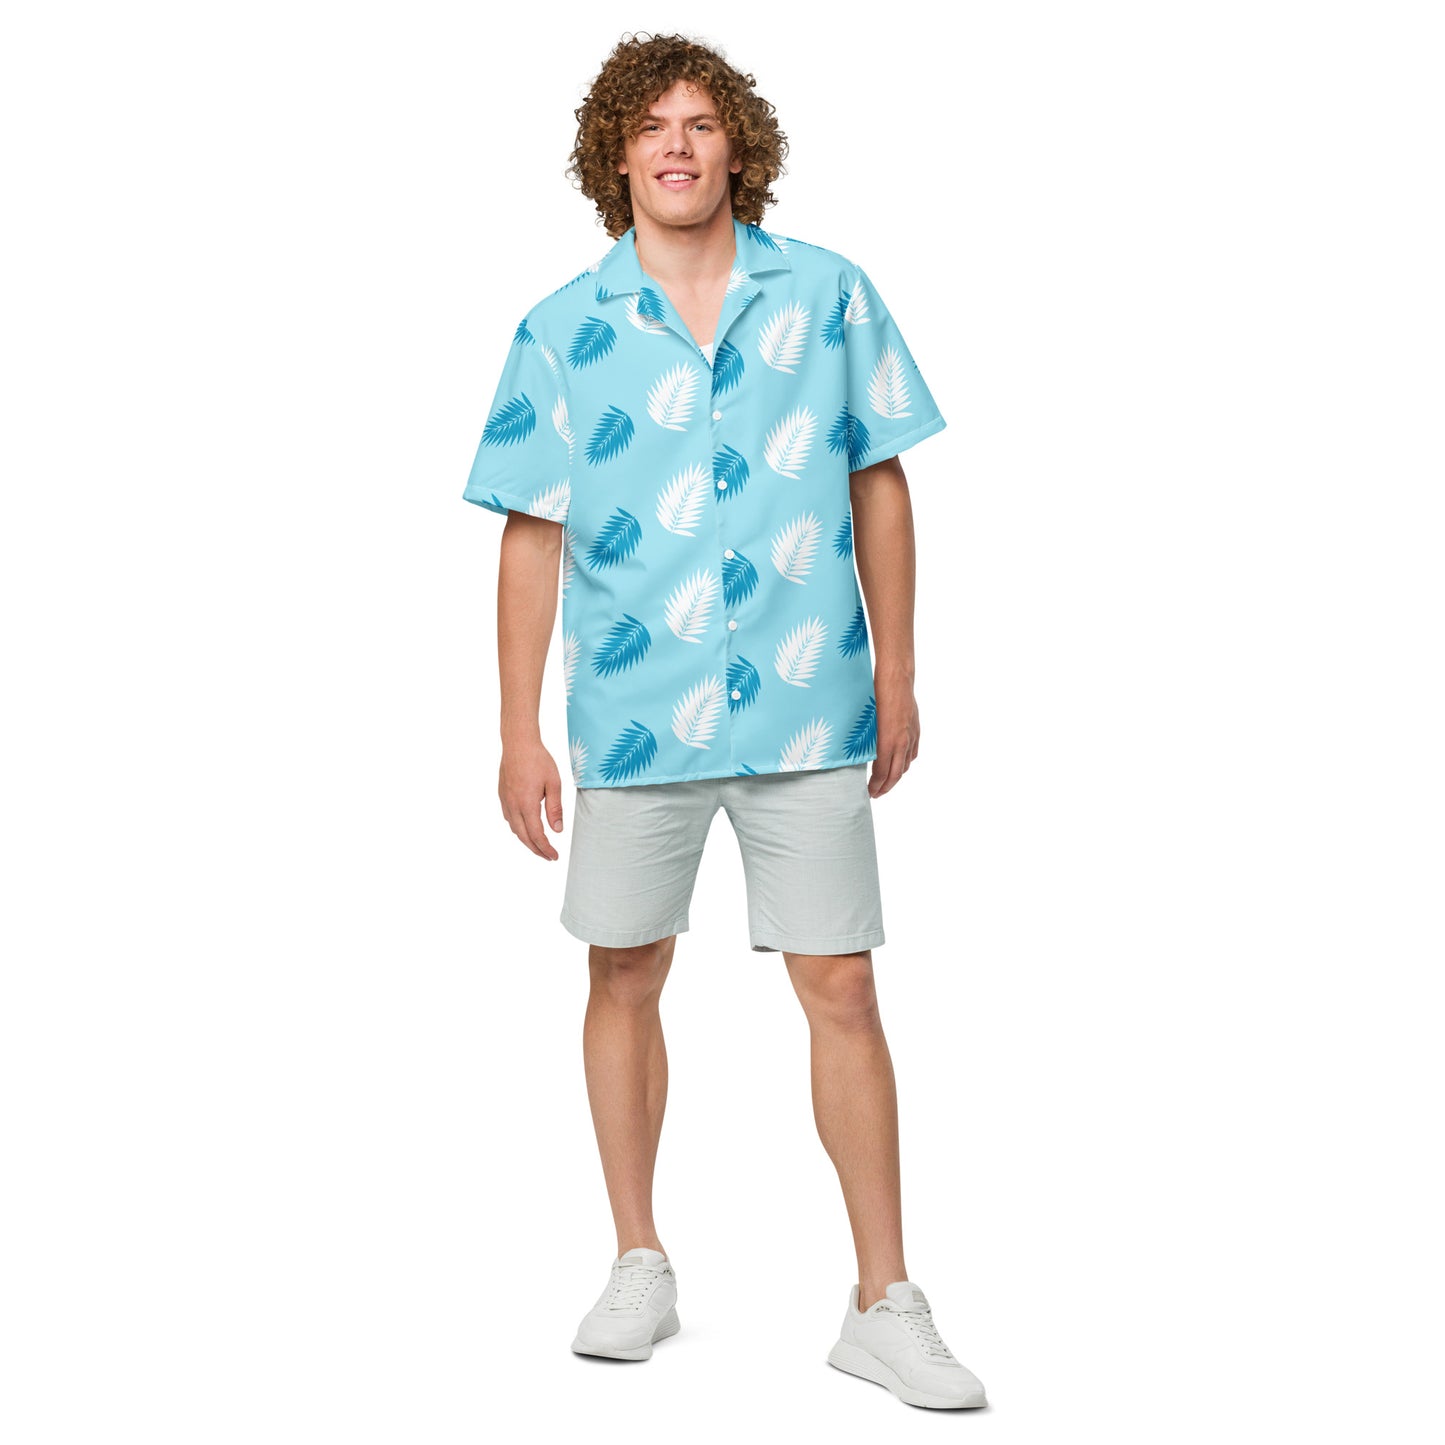 Palm Tree Leaves (Blue & White) - Unisex Button Shirt